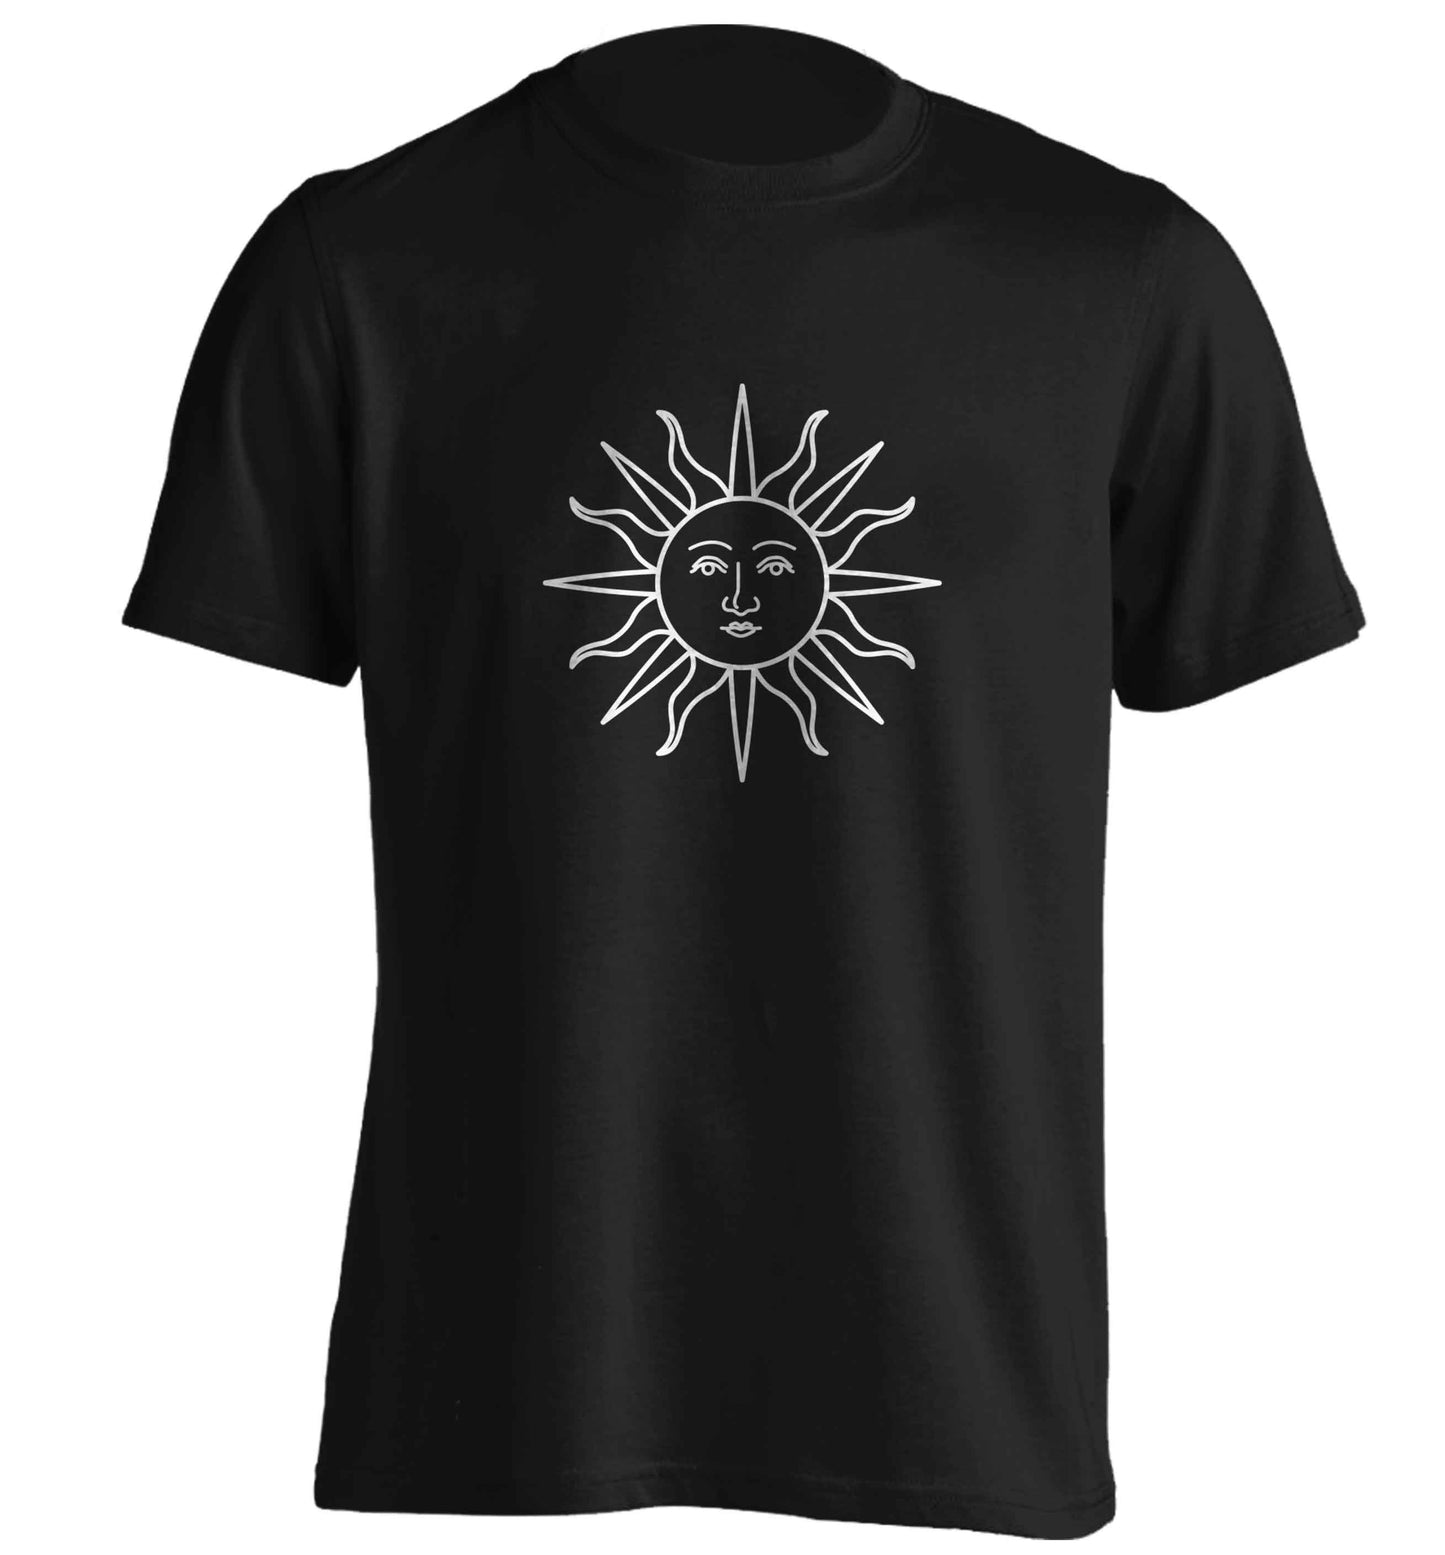 Sun face illustration adults unisex black Tshirt 2XL